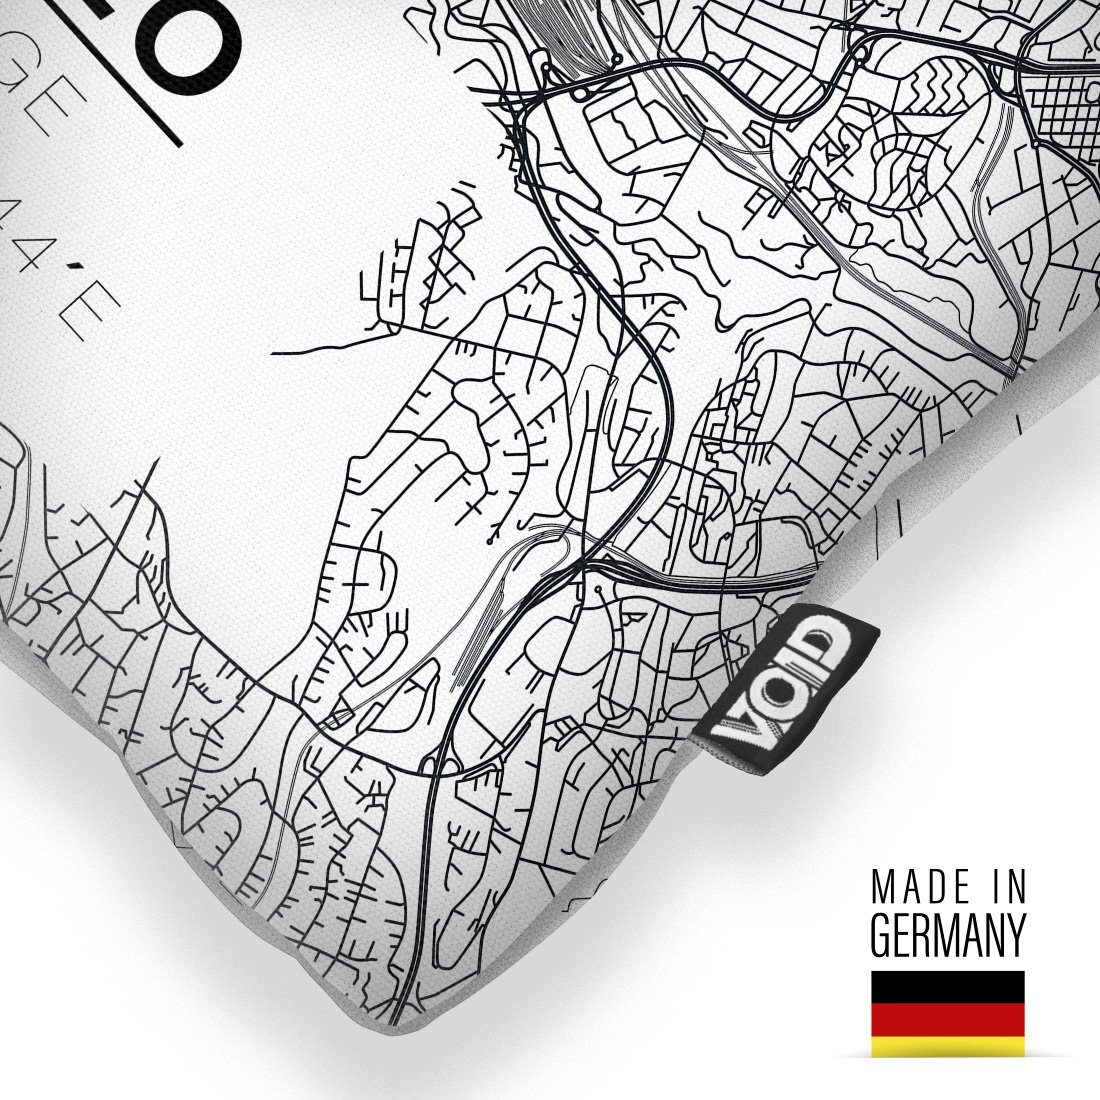 Oslo Landkarte skandinavien VOID Kissenbezug, Stück), Norge (1